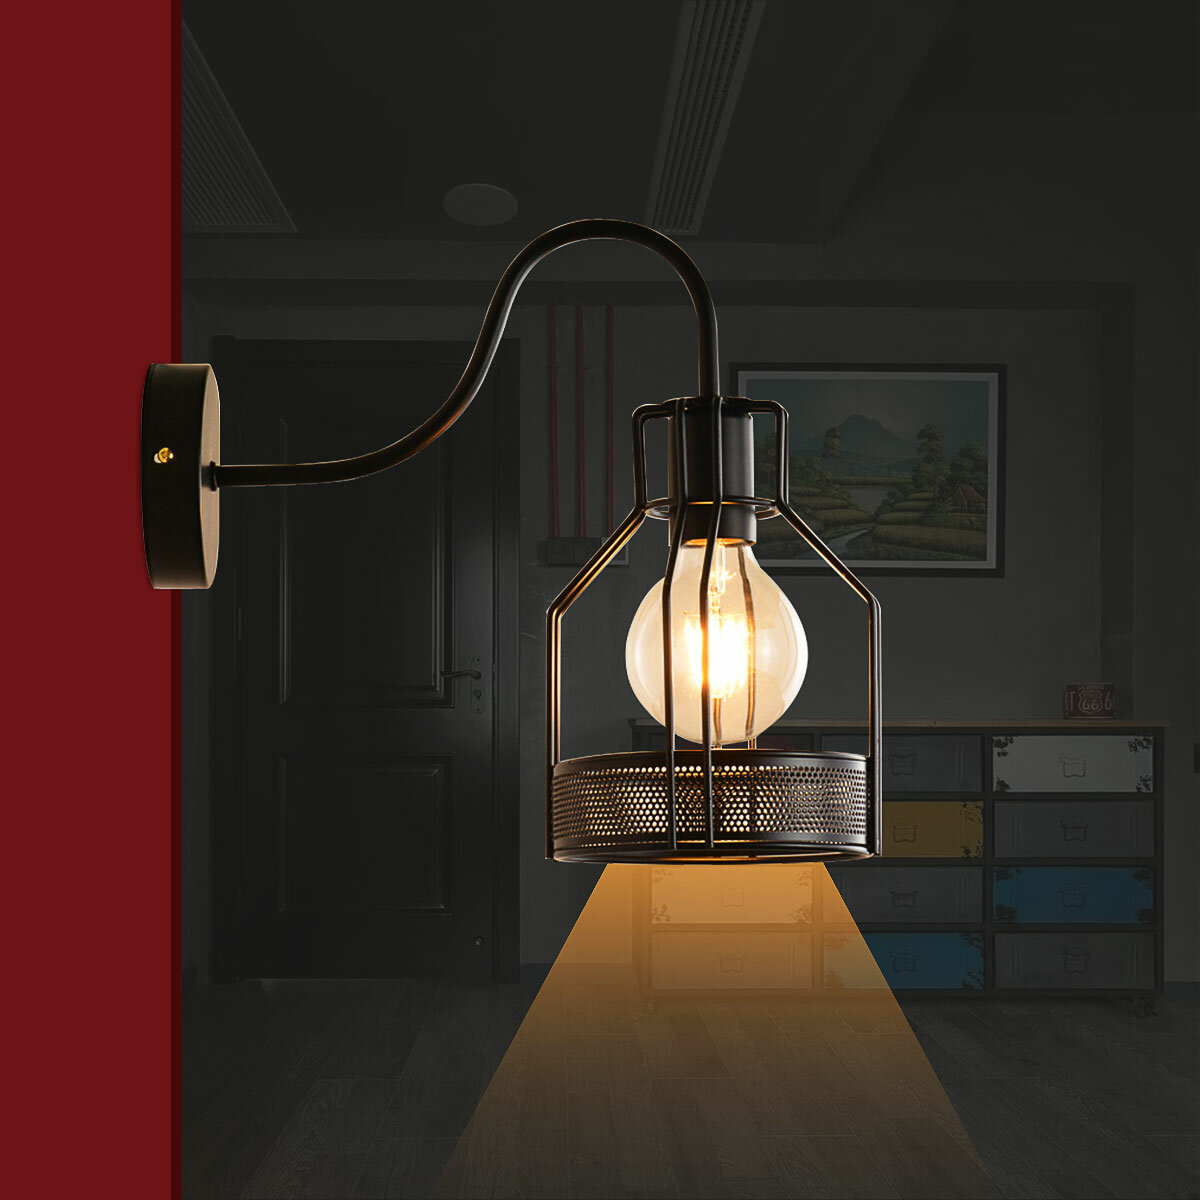 E27 Retro Wall Lamp Vintage Bedroom Bar Sconce Light Indoor Fixture Home Decoration AC110-240V